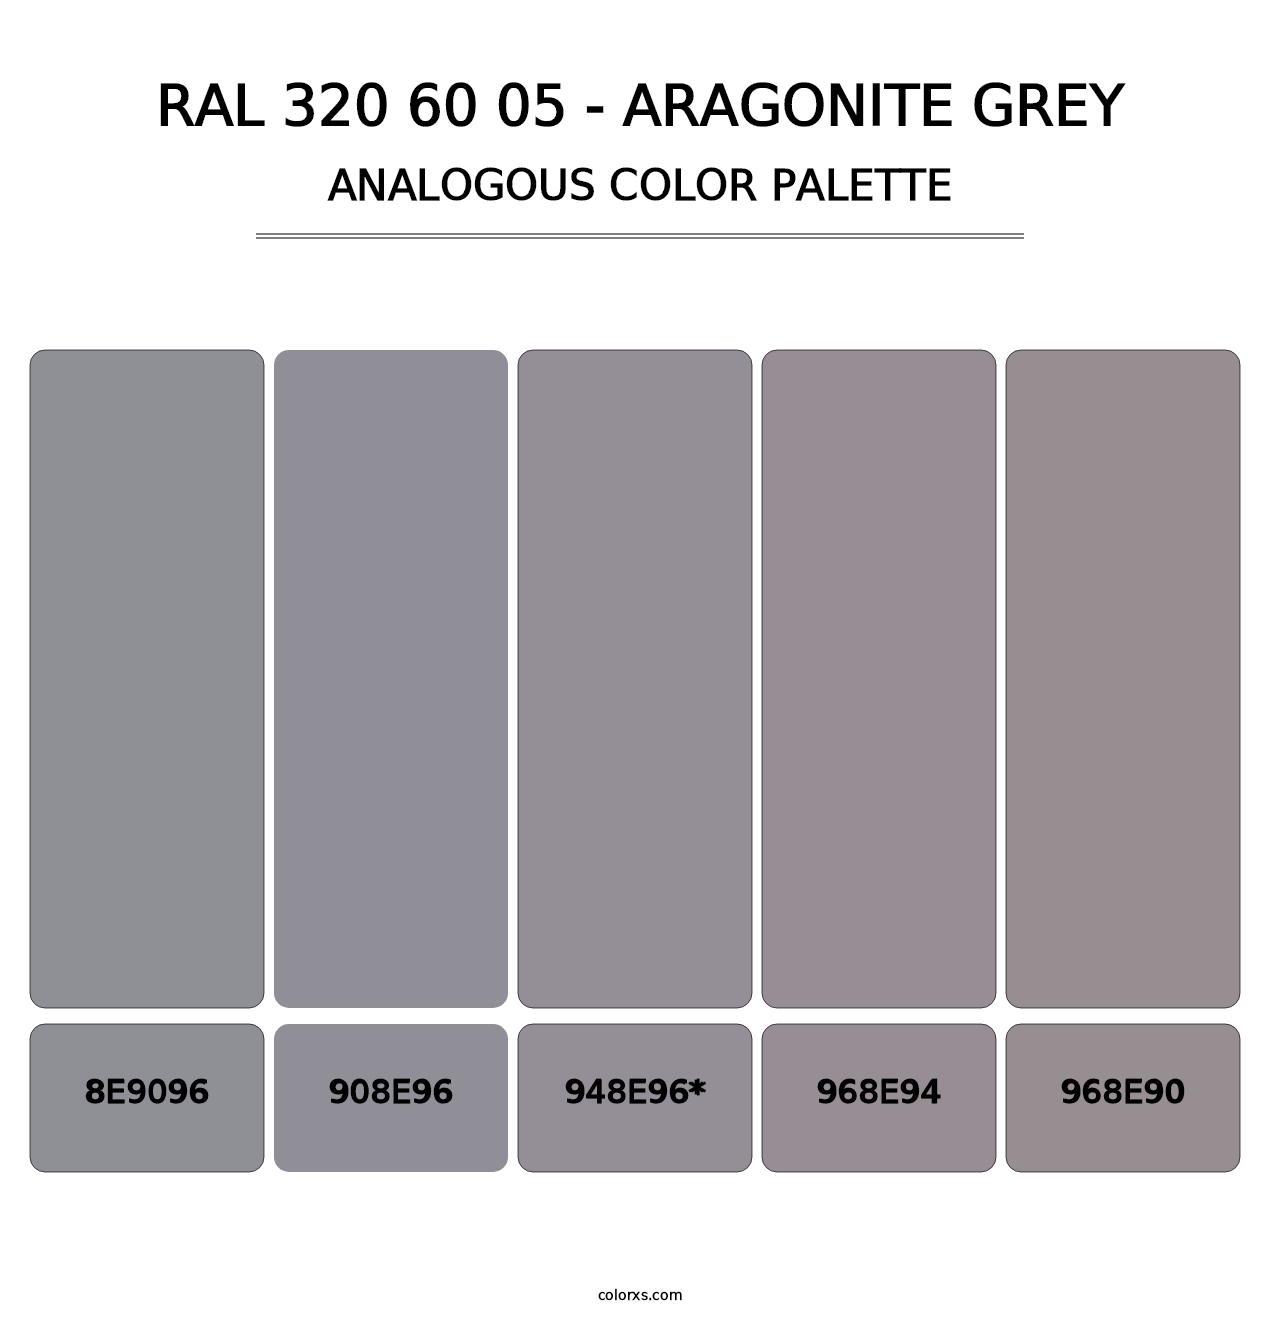 RAL 320 60 05 - Aragonite Grey - Analogous Color Palette